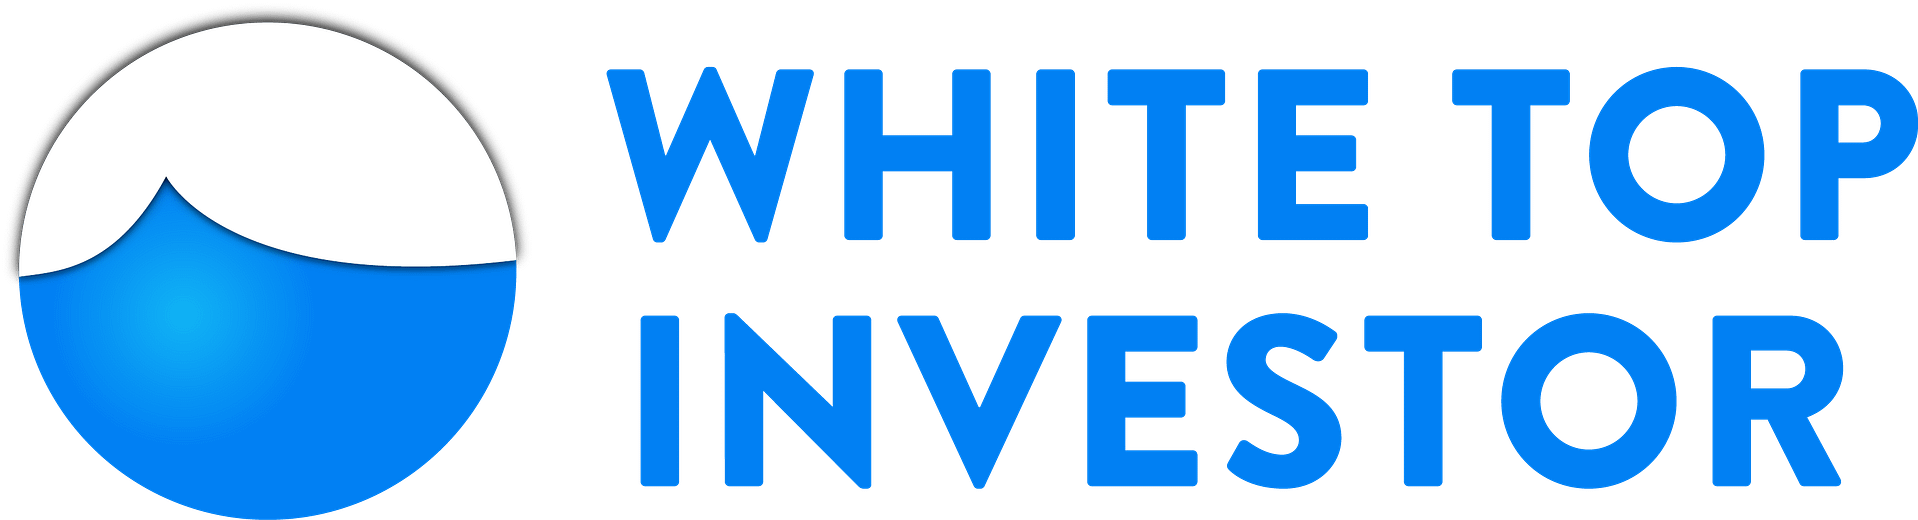 White Top Investor